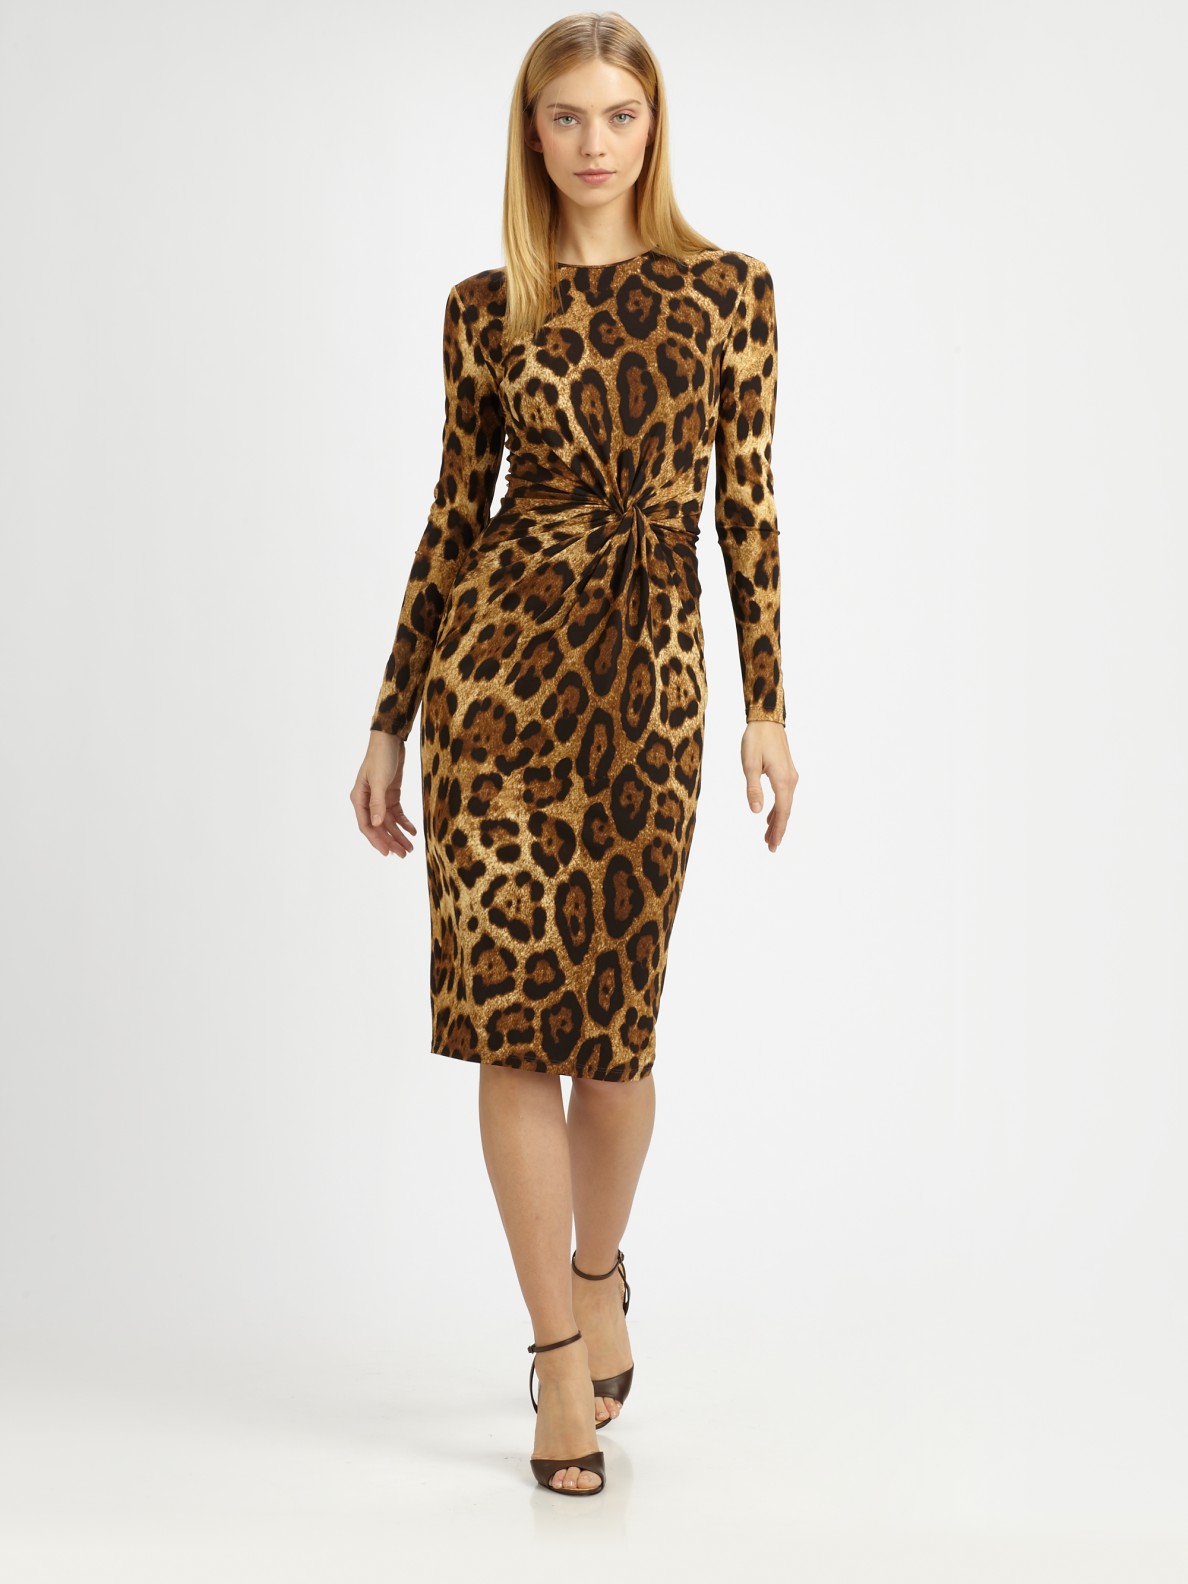 Lyst - Michael Kors Leopard Print Dress in Brown